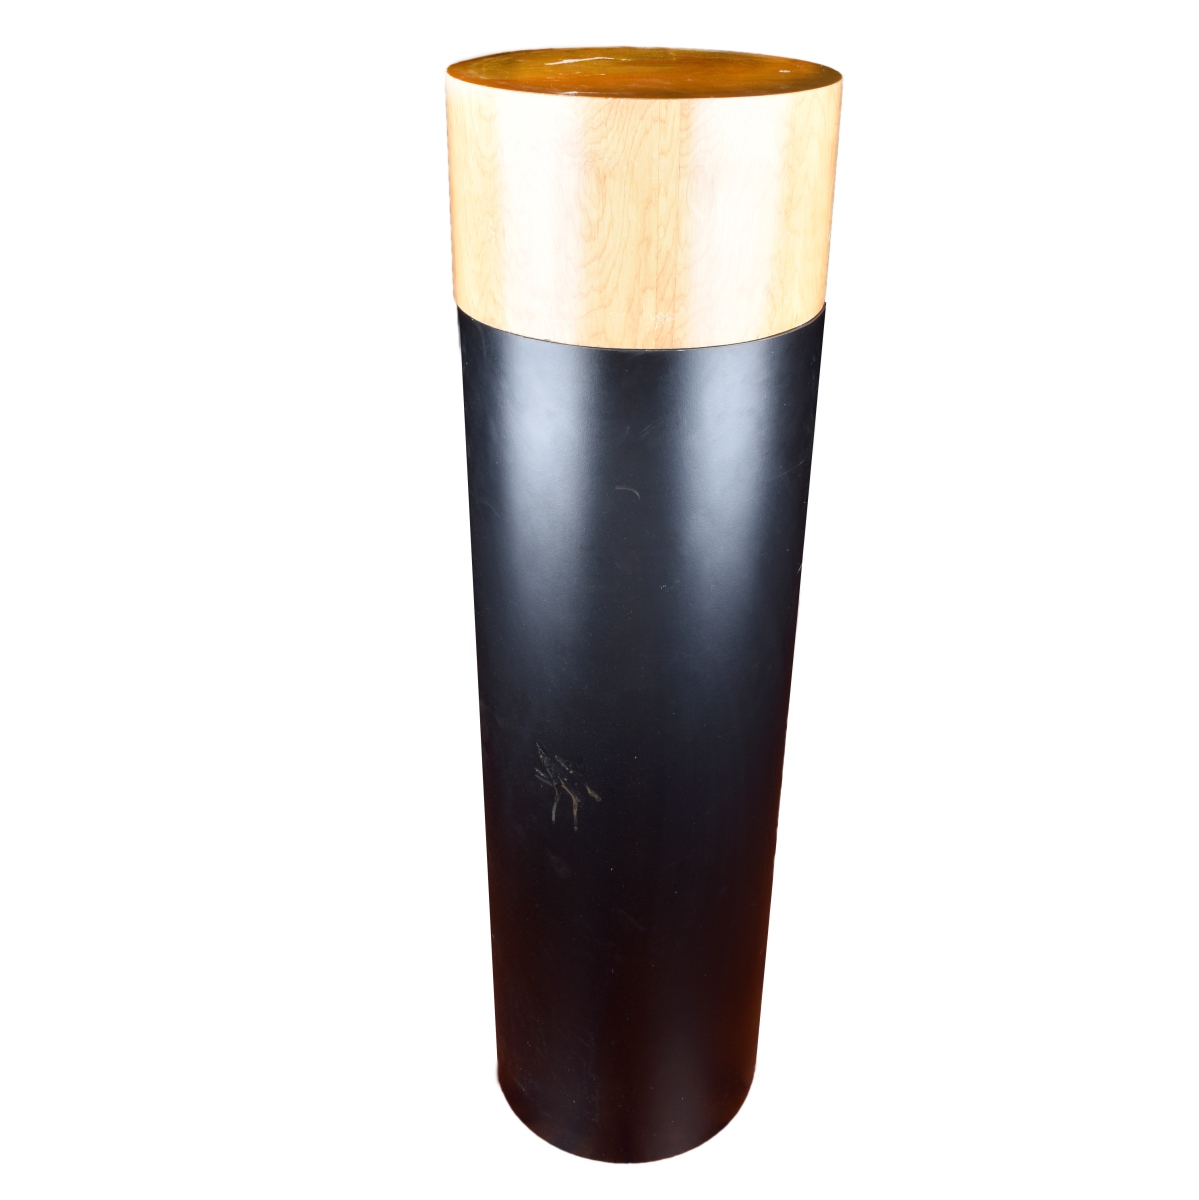 Black Laminate Round Pedestal with Wood Top